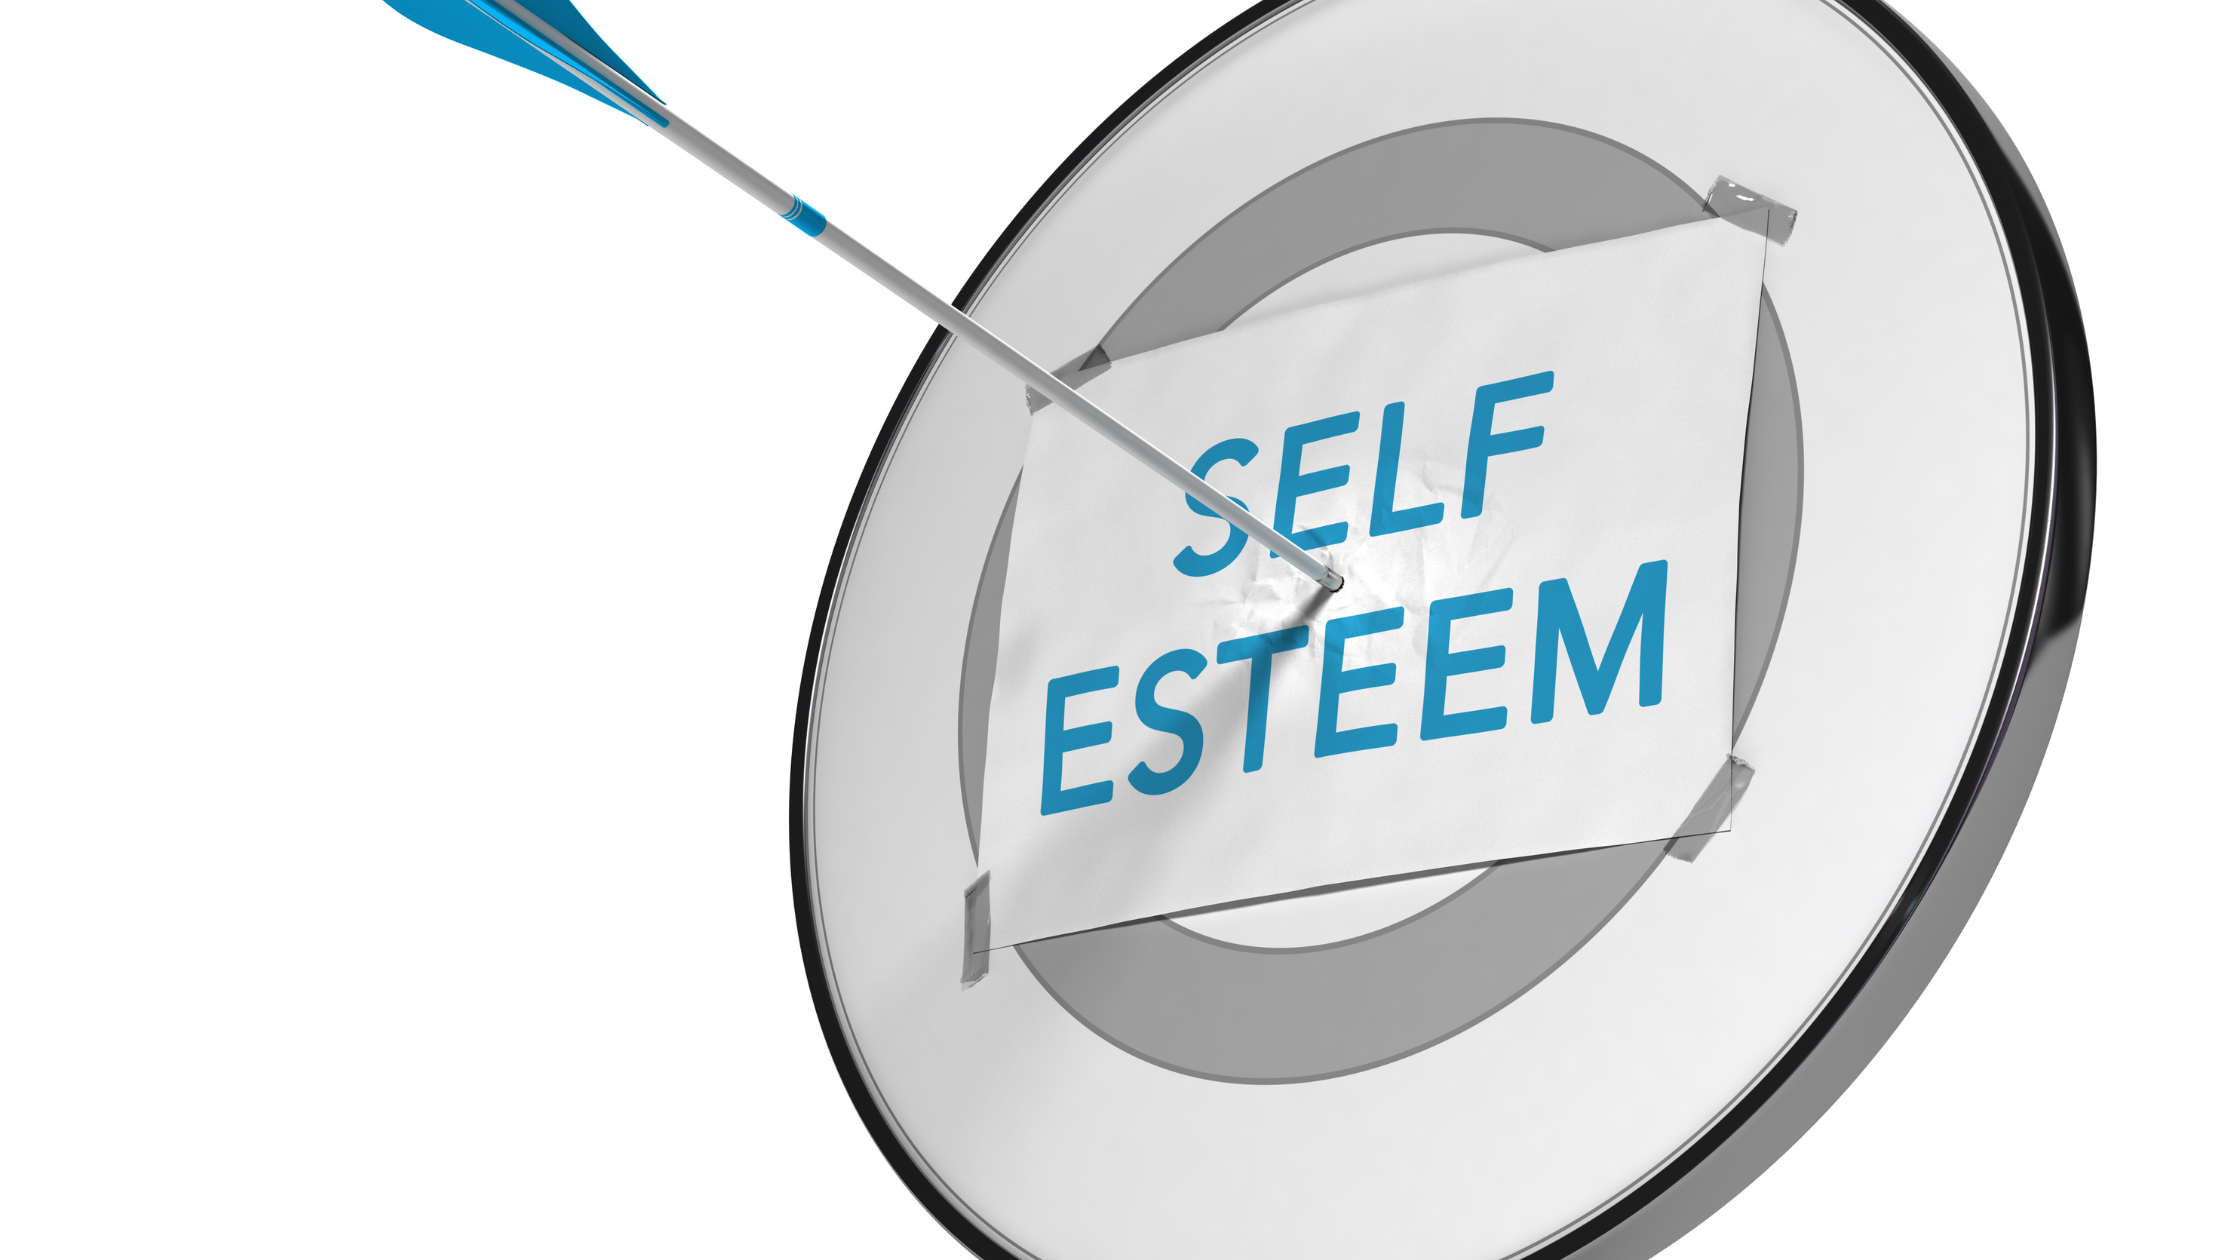 A post talking about self-esteem